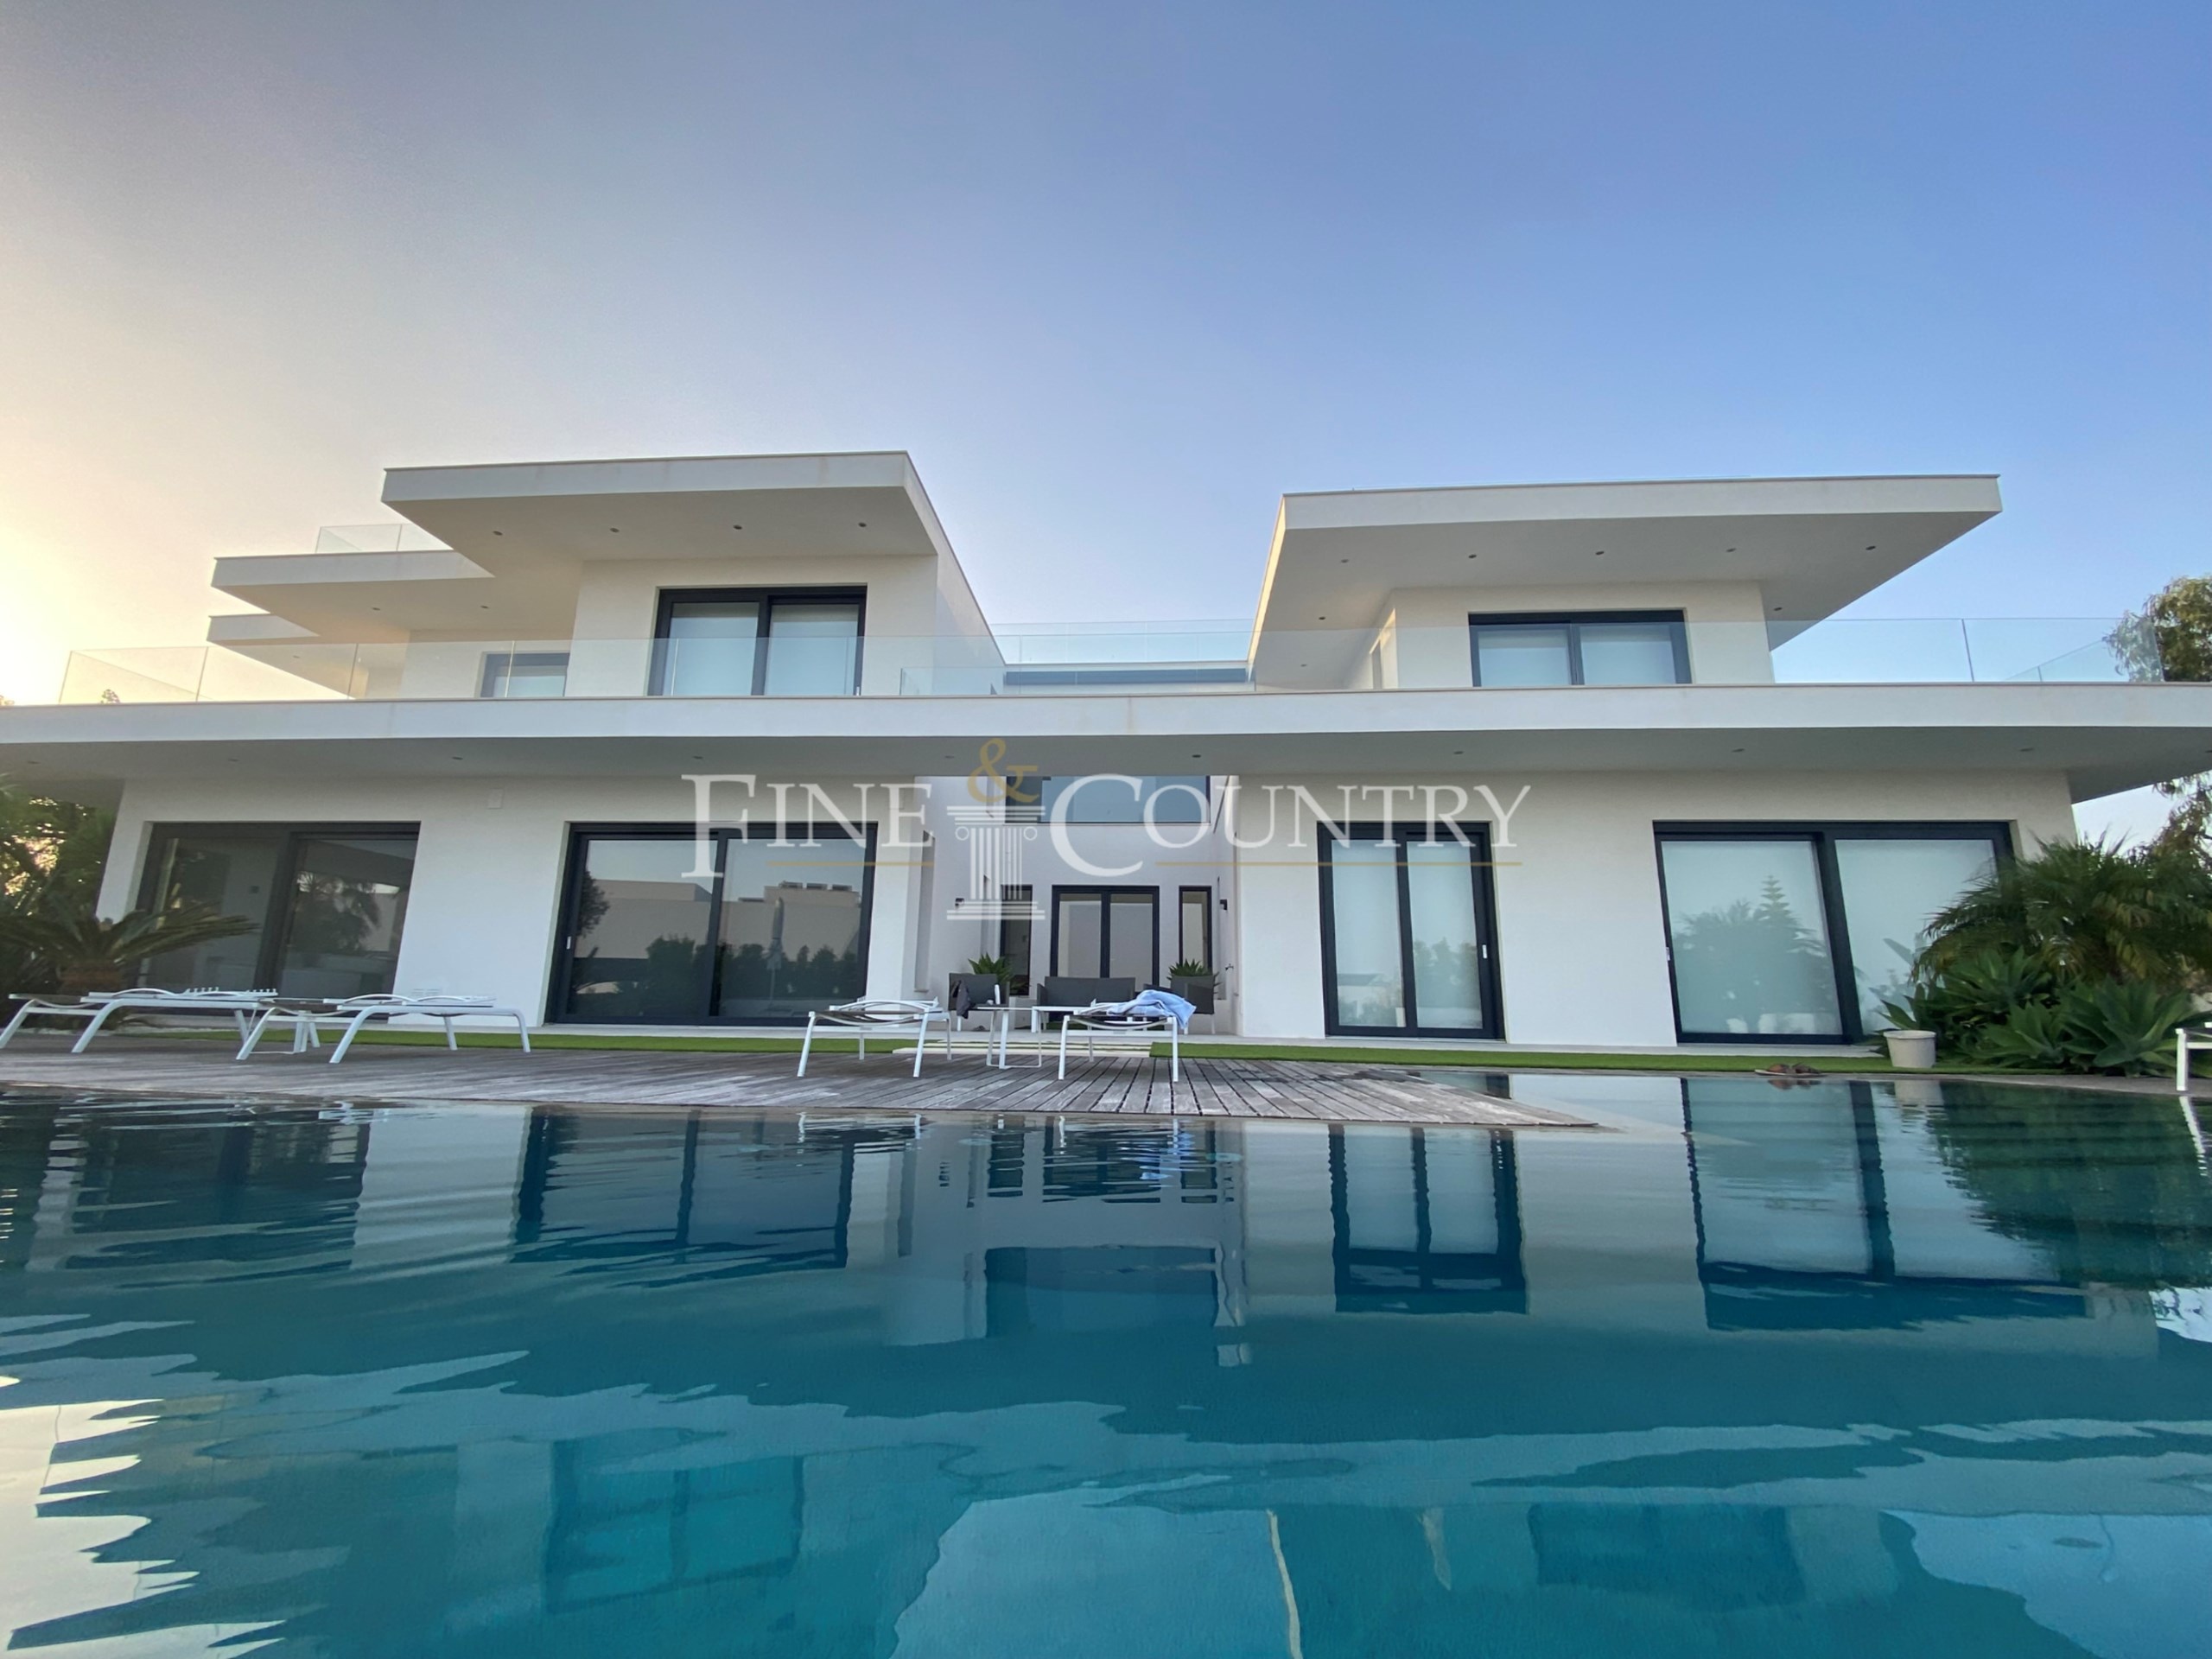 Photo of Carvoeiro - Contemporary 4-bedroom villa with pool and sea views 